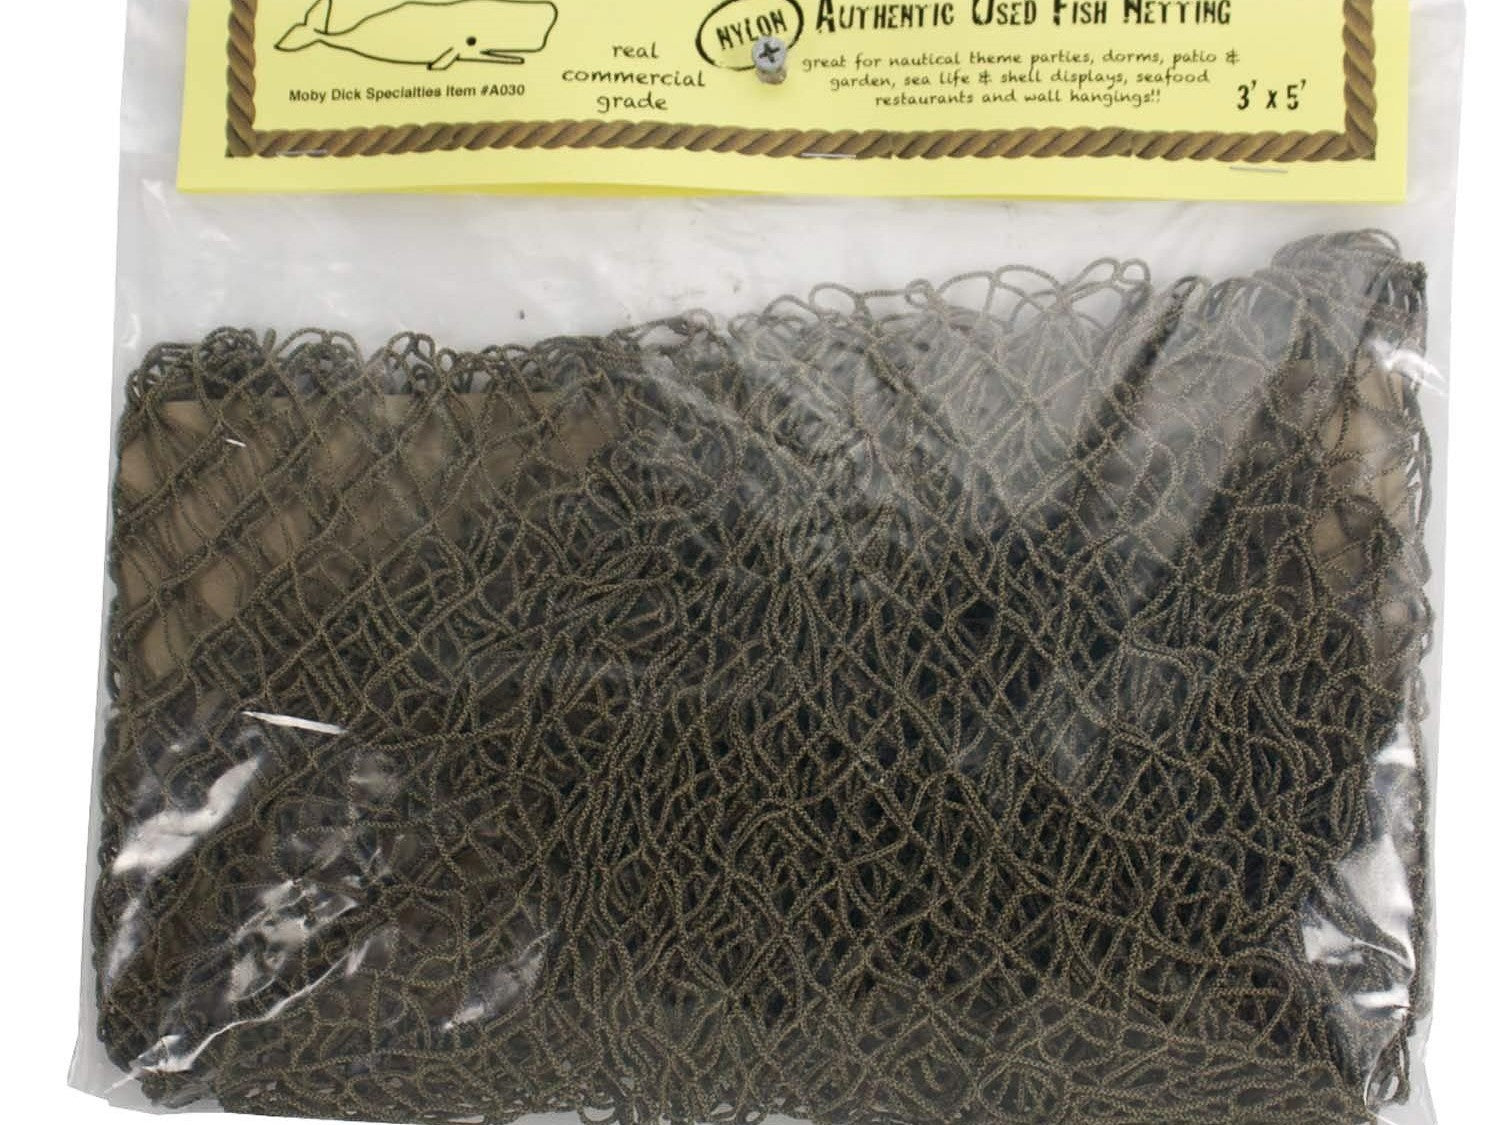 Authentic Fish Net